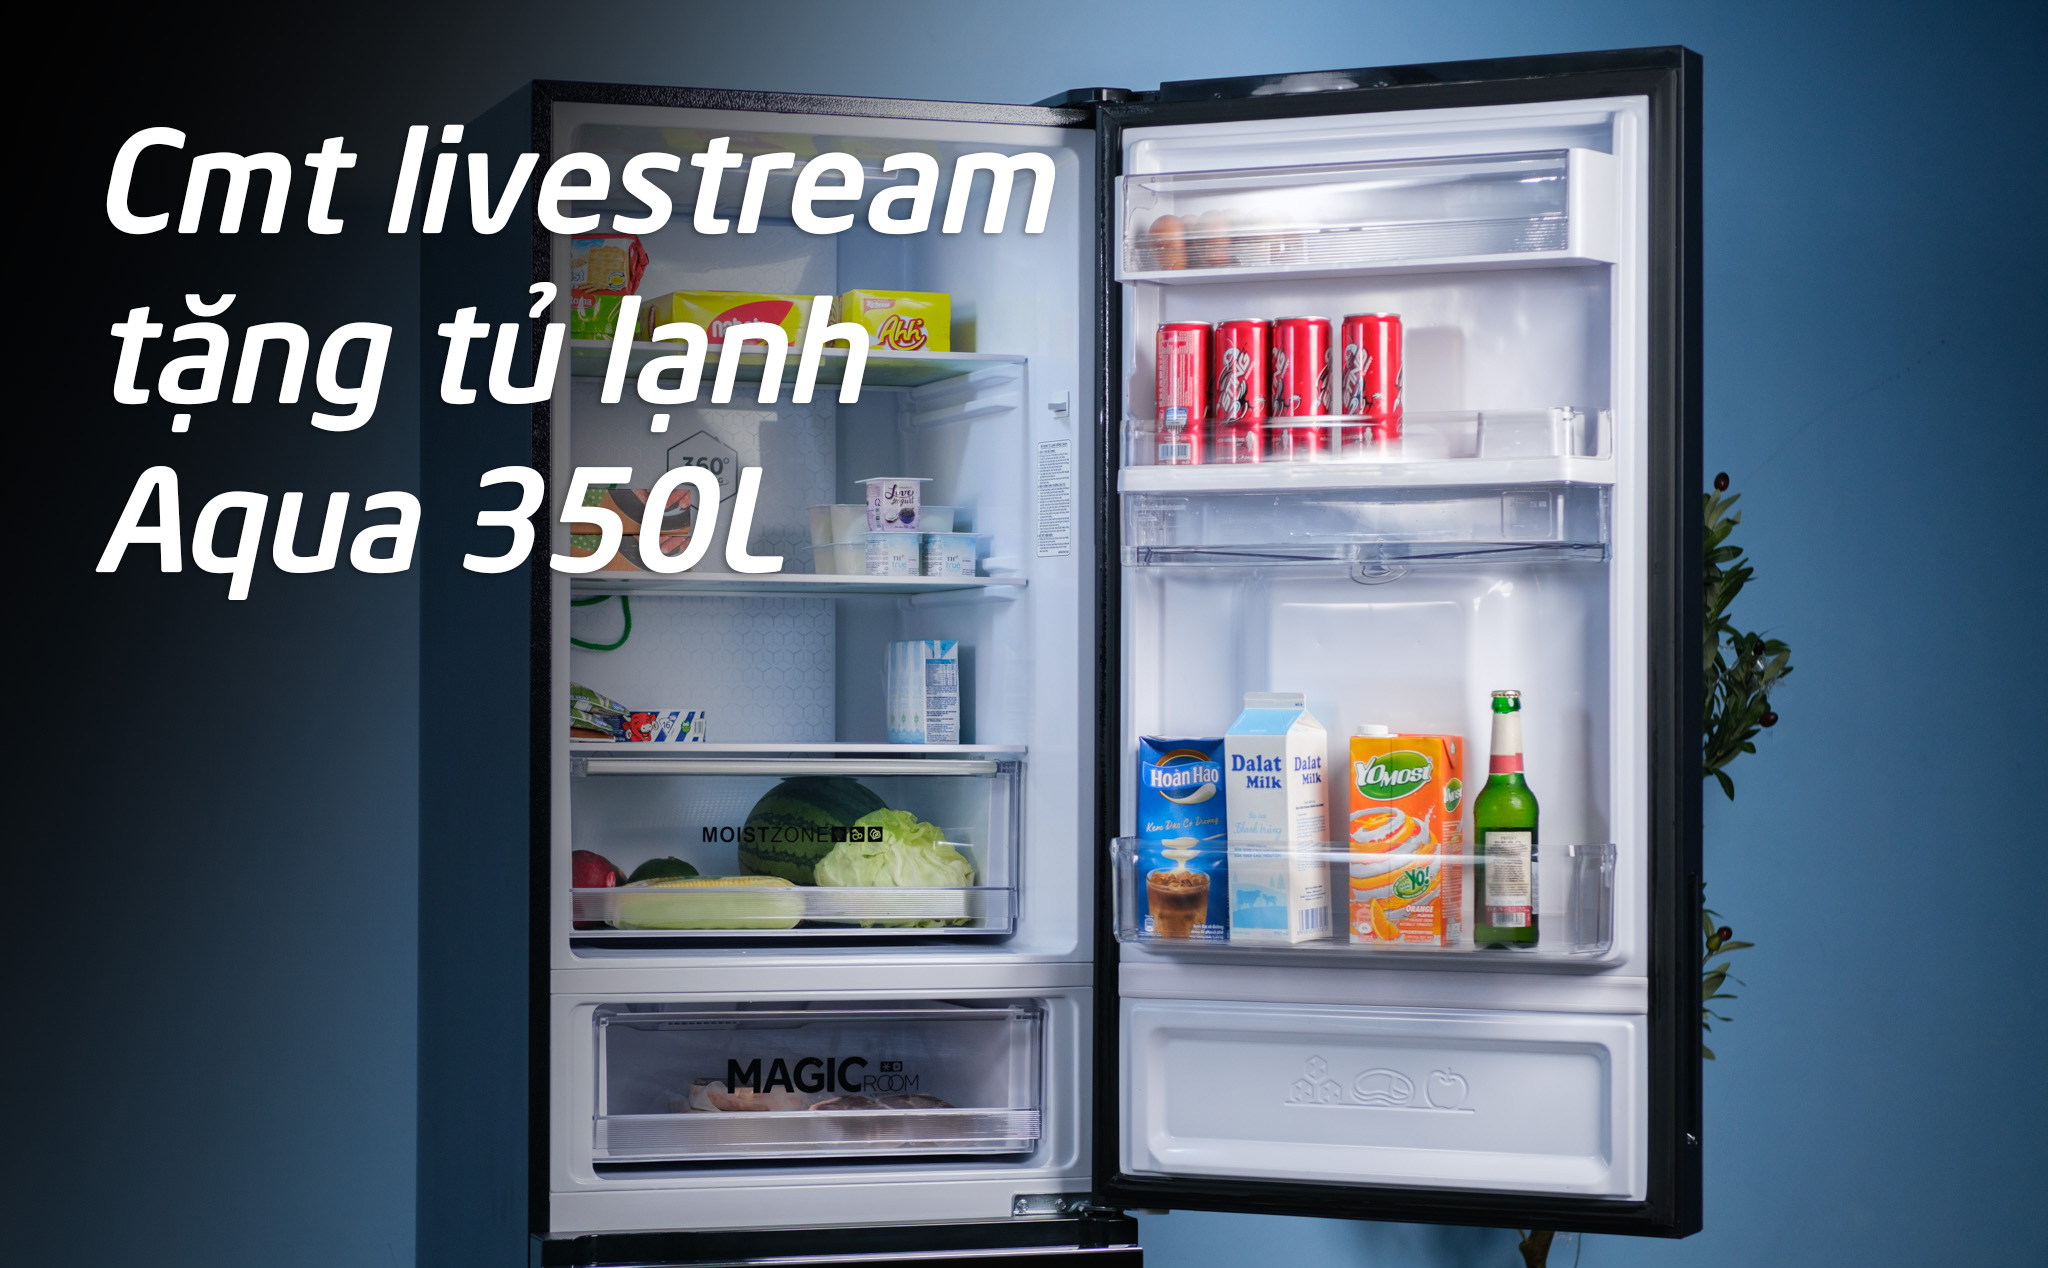 Tặng tủ lạnh Aqua cho anh em xem livestream Aqua tối nay